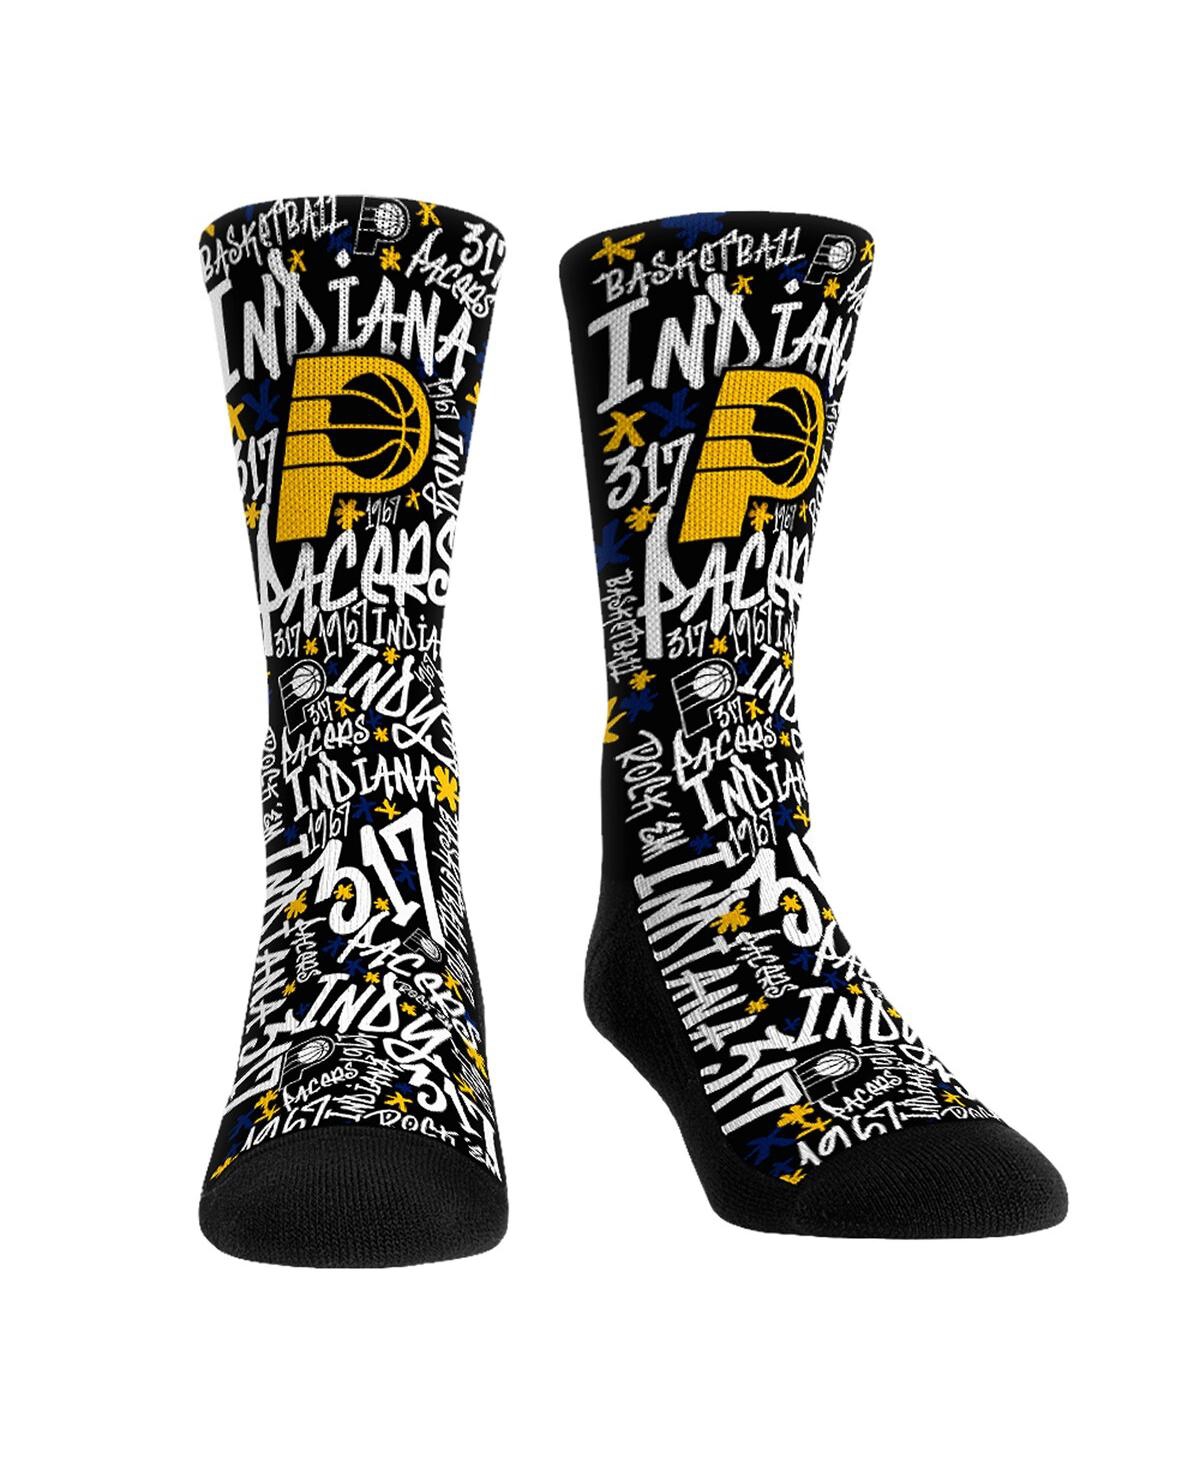 Men's and Women's Rock 'Em Socks Indiana Pacers Graffiti Crew Socks - Multi